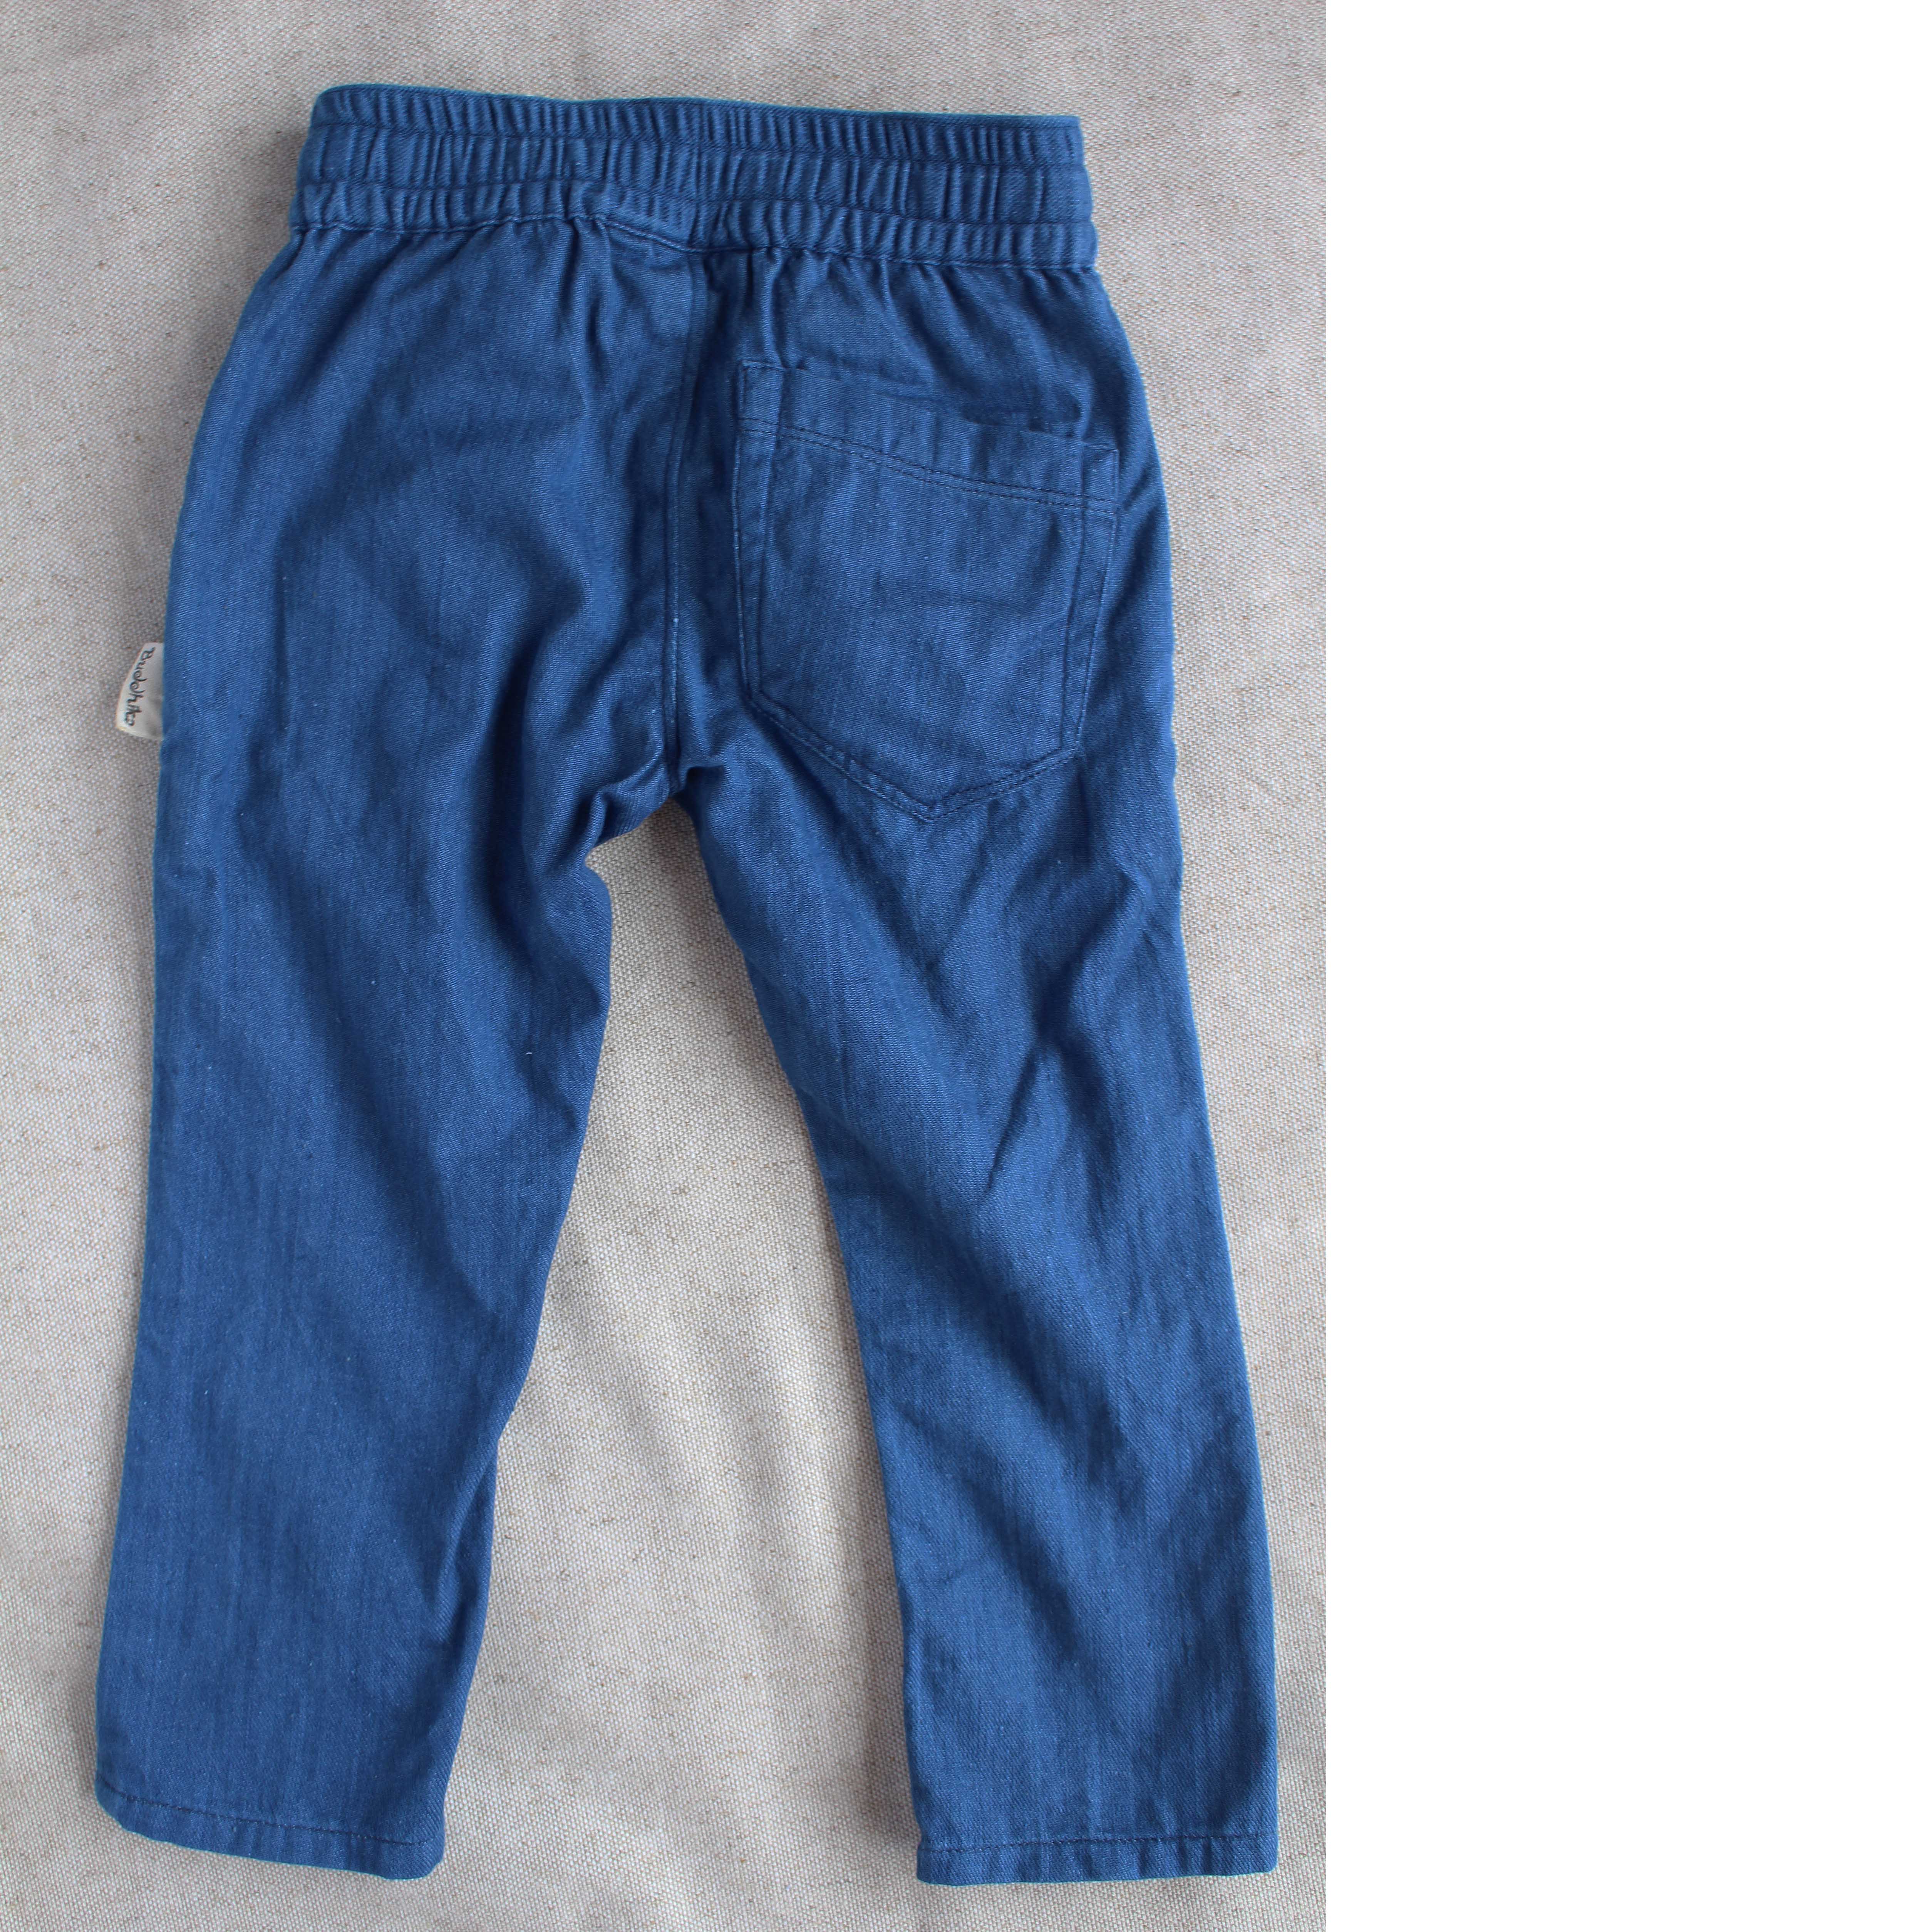 Pants in Natural Dyed Indigo Blue - Buddhika